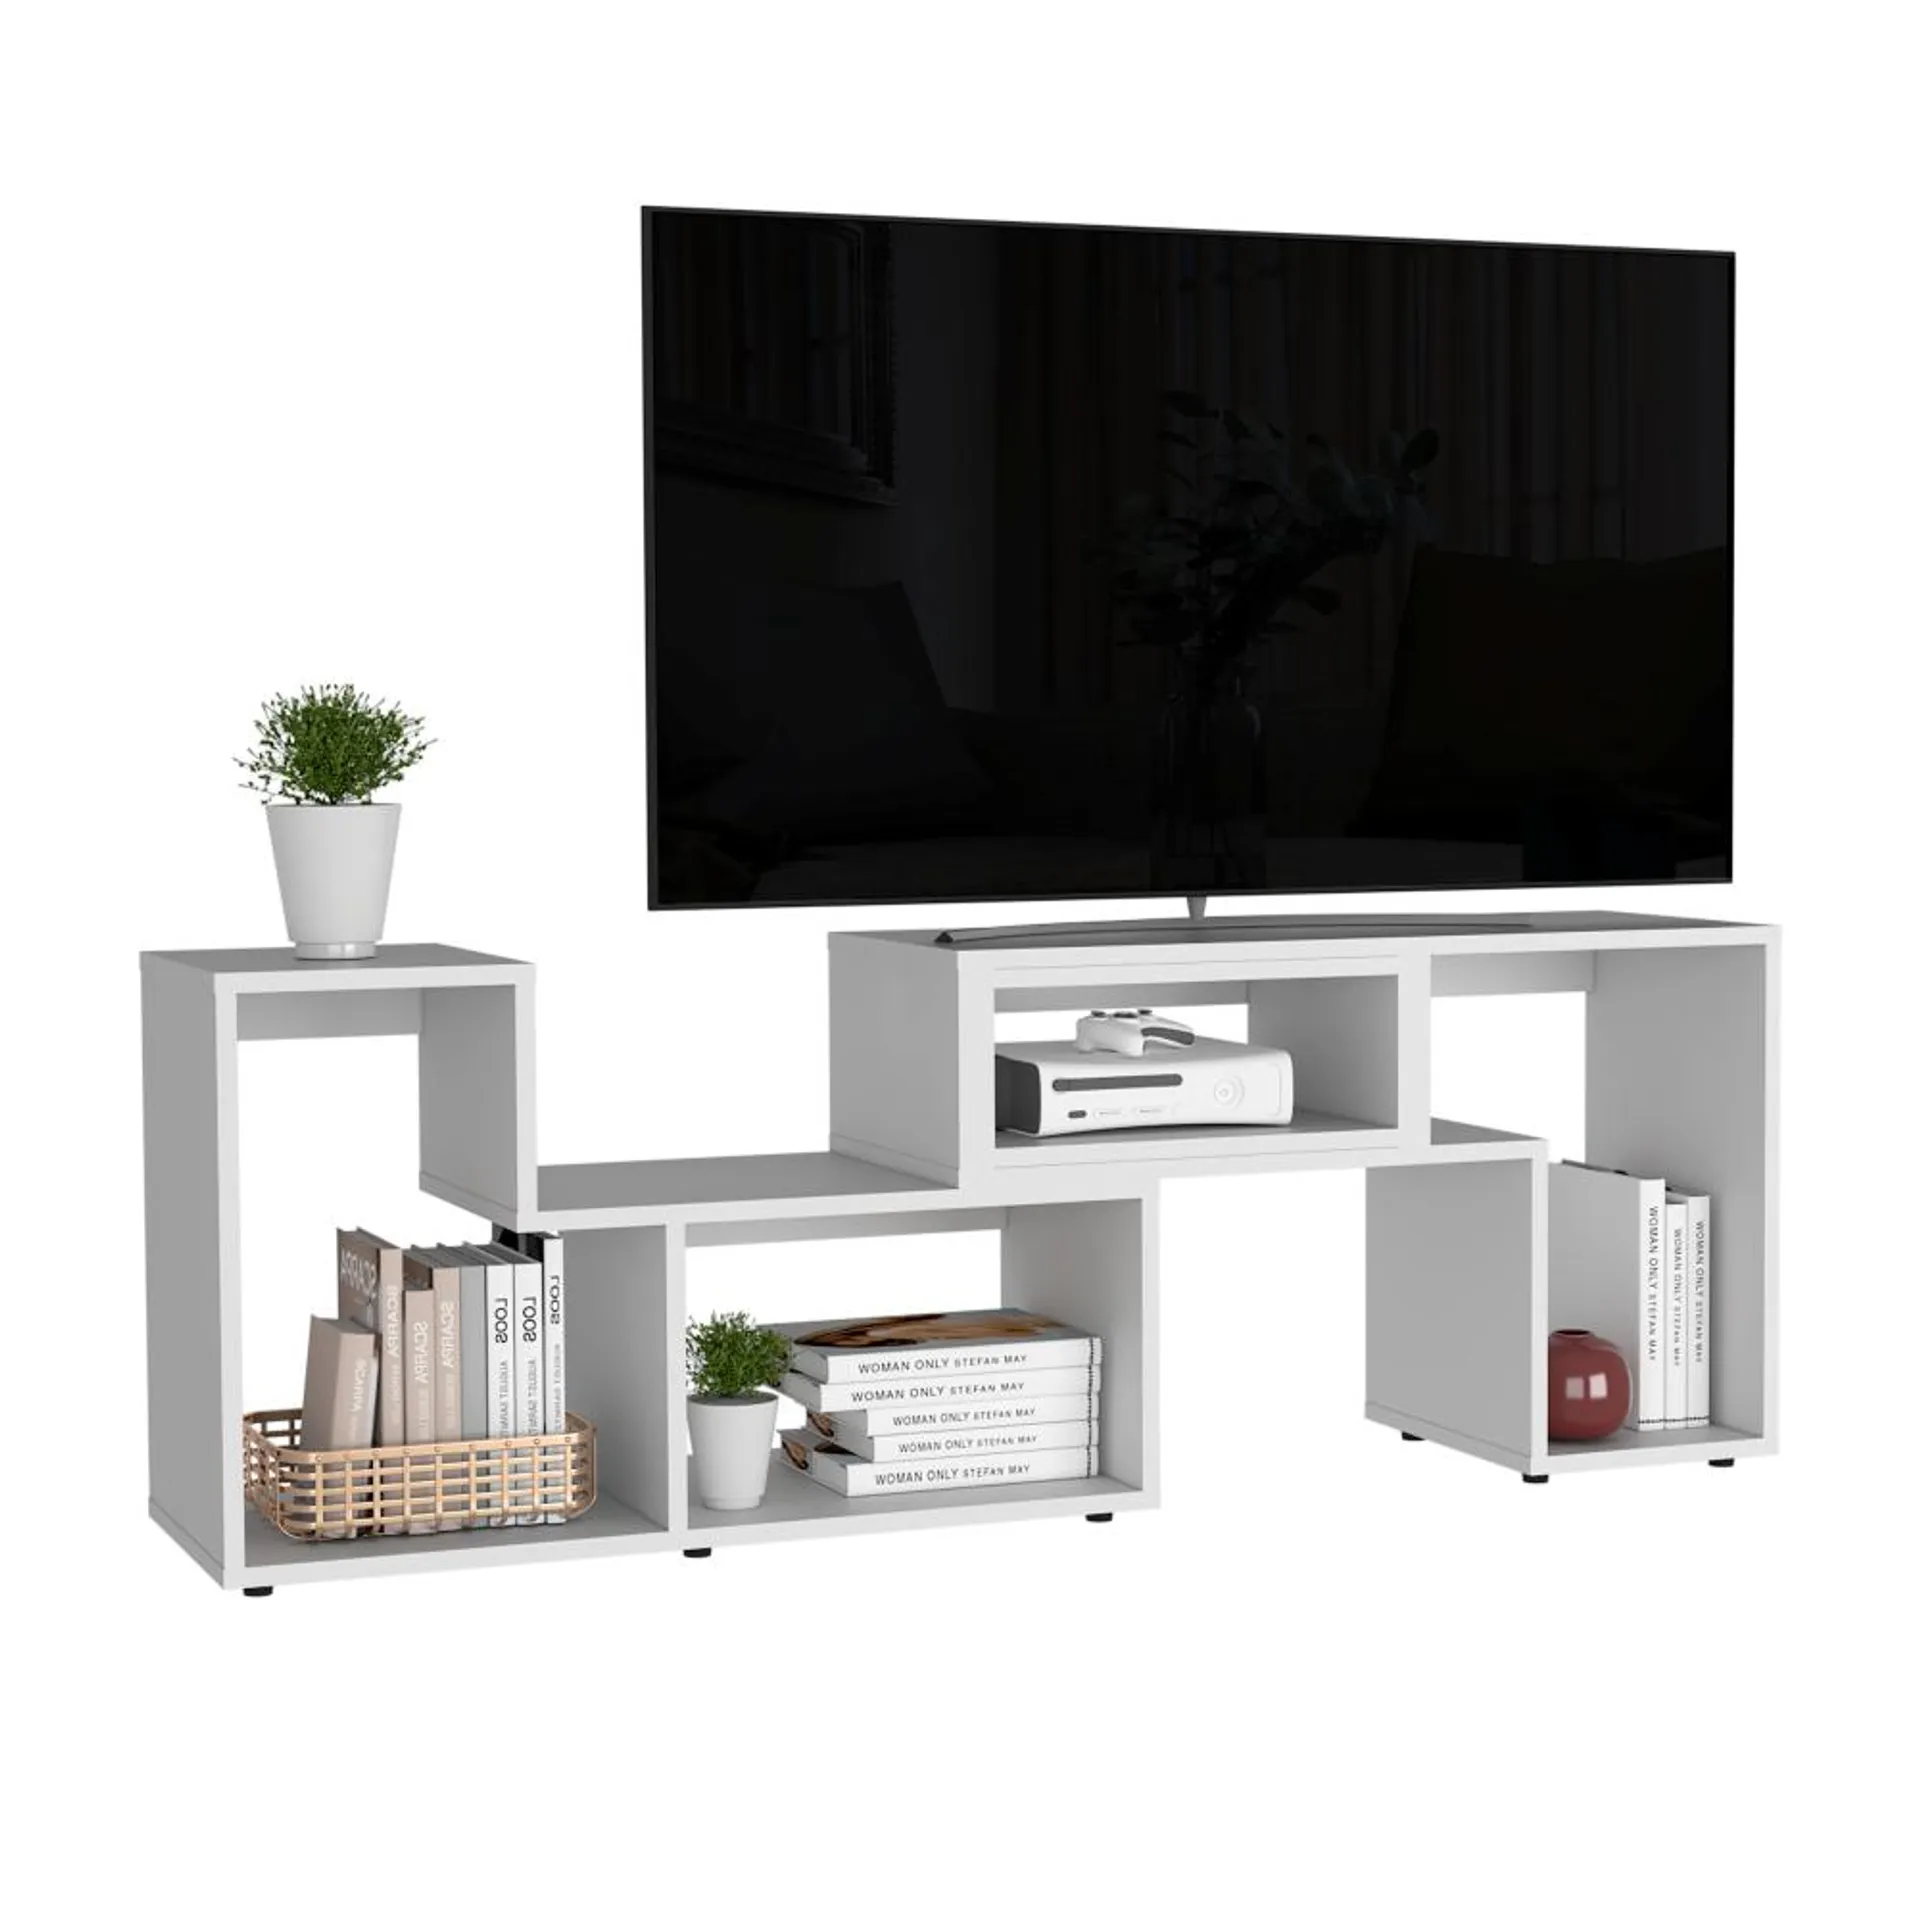 Mesa para tv ascher, blanco duqueza, con espacio para televisor de hasta 50 pulgadas